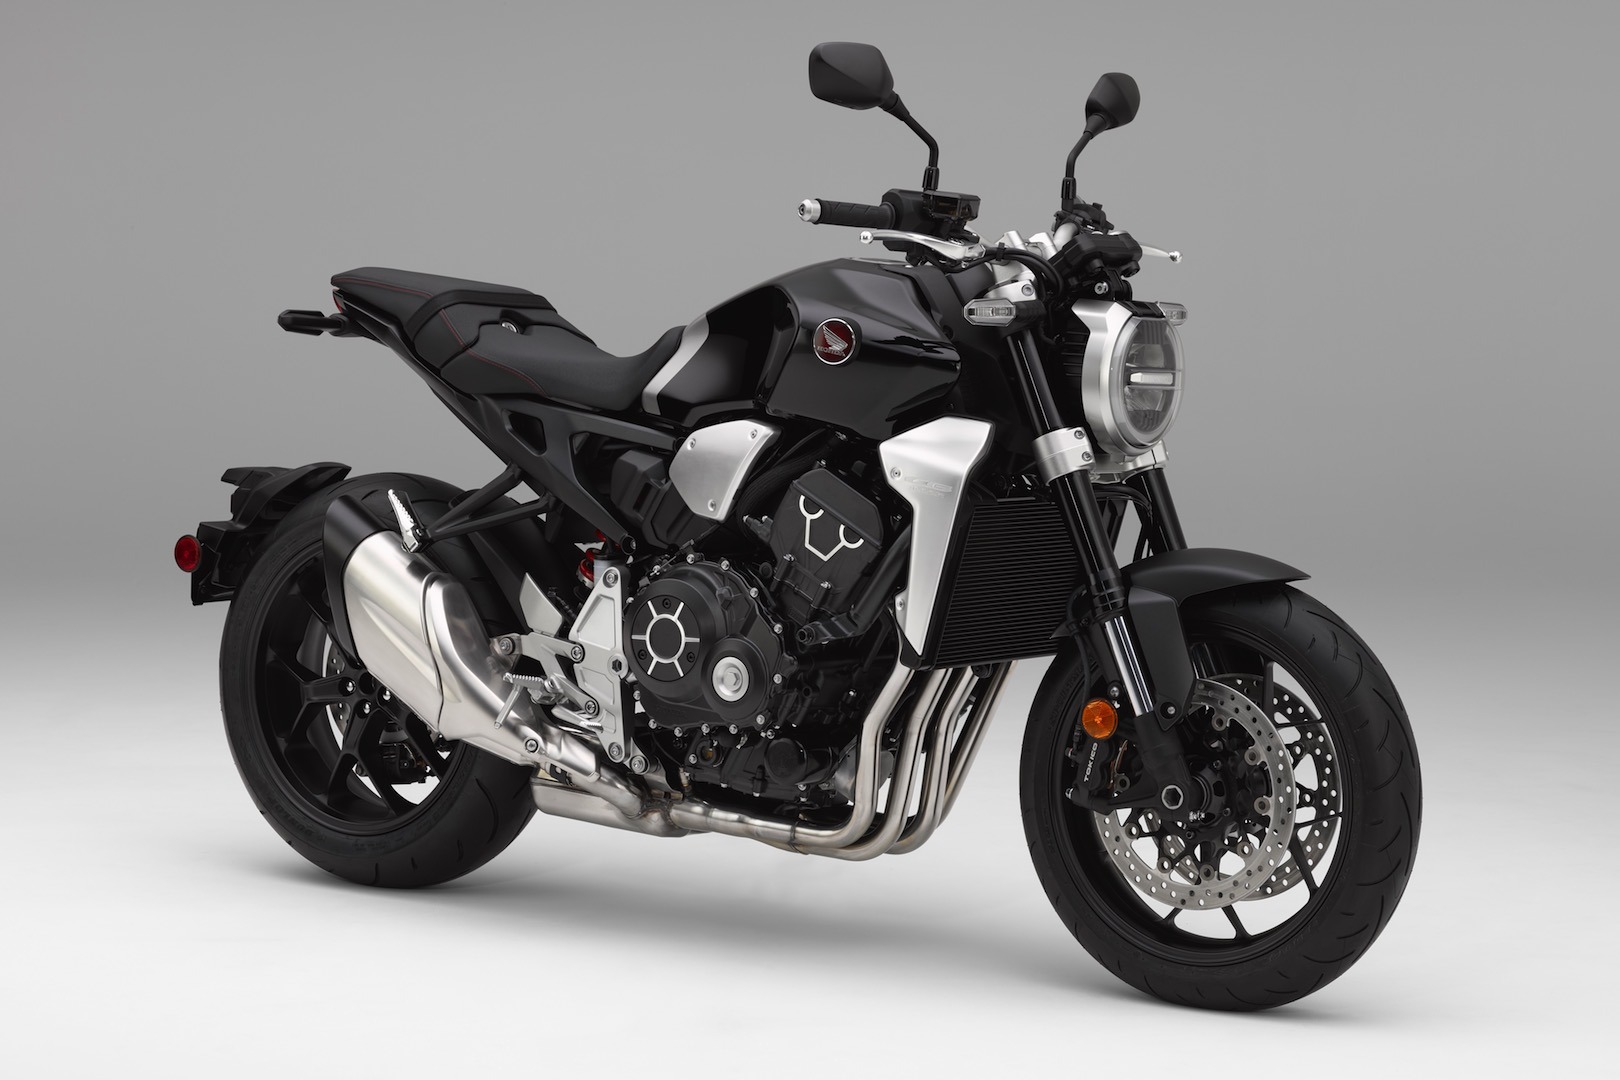 2018-Honda-CB1000R-First-Look-naked-sport-motorcycle-12.jpg